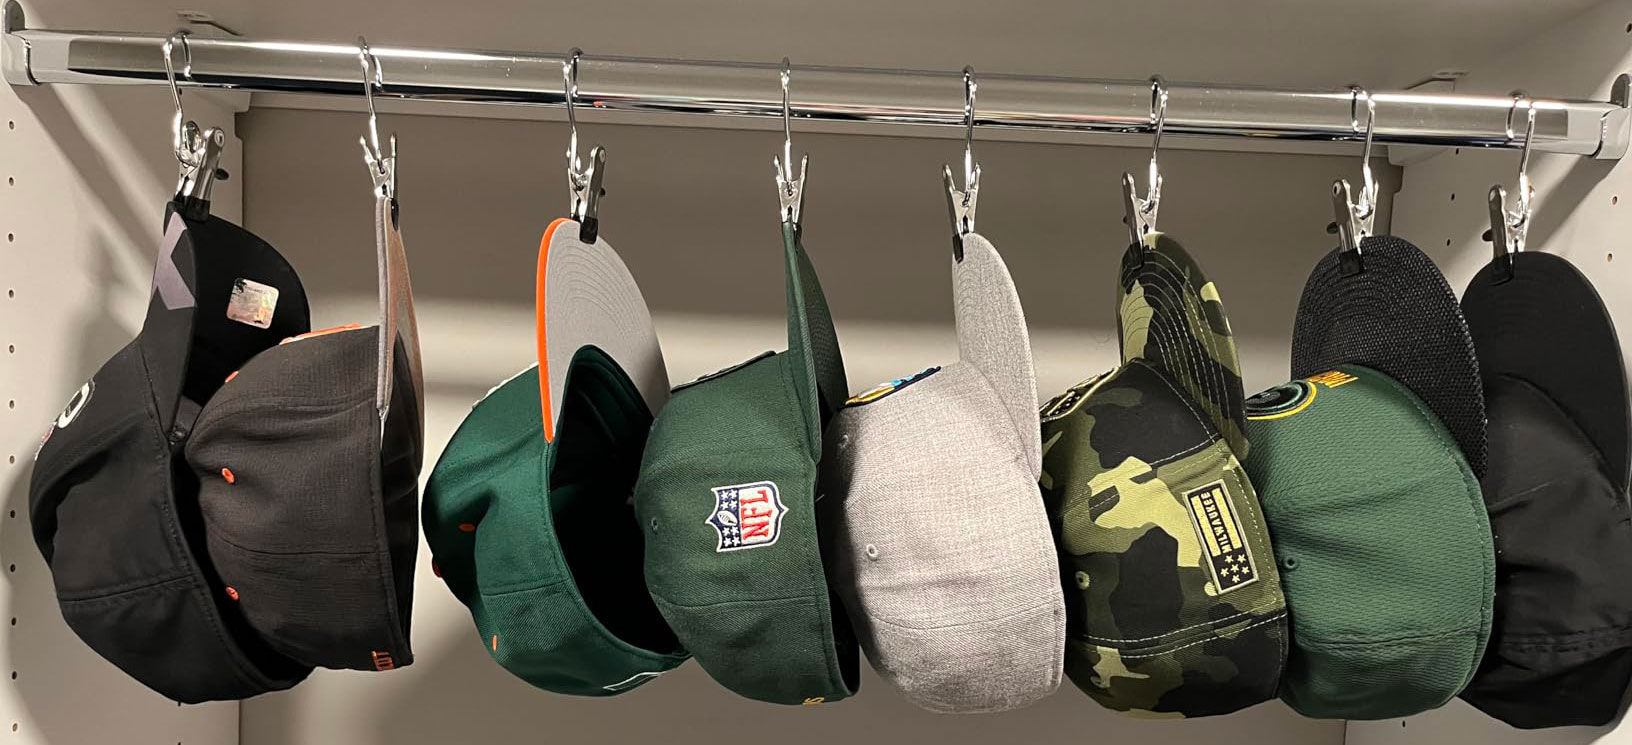 Using Frezon footwear hangers for hats